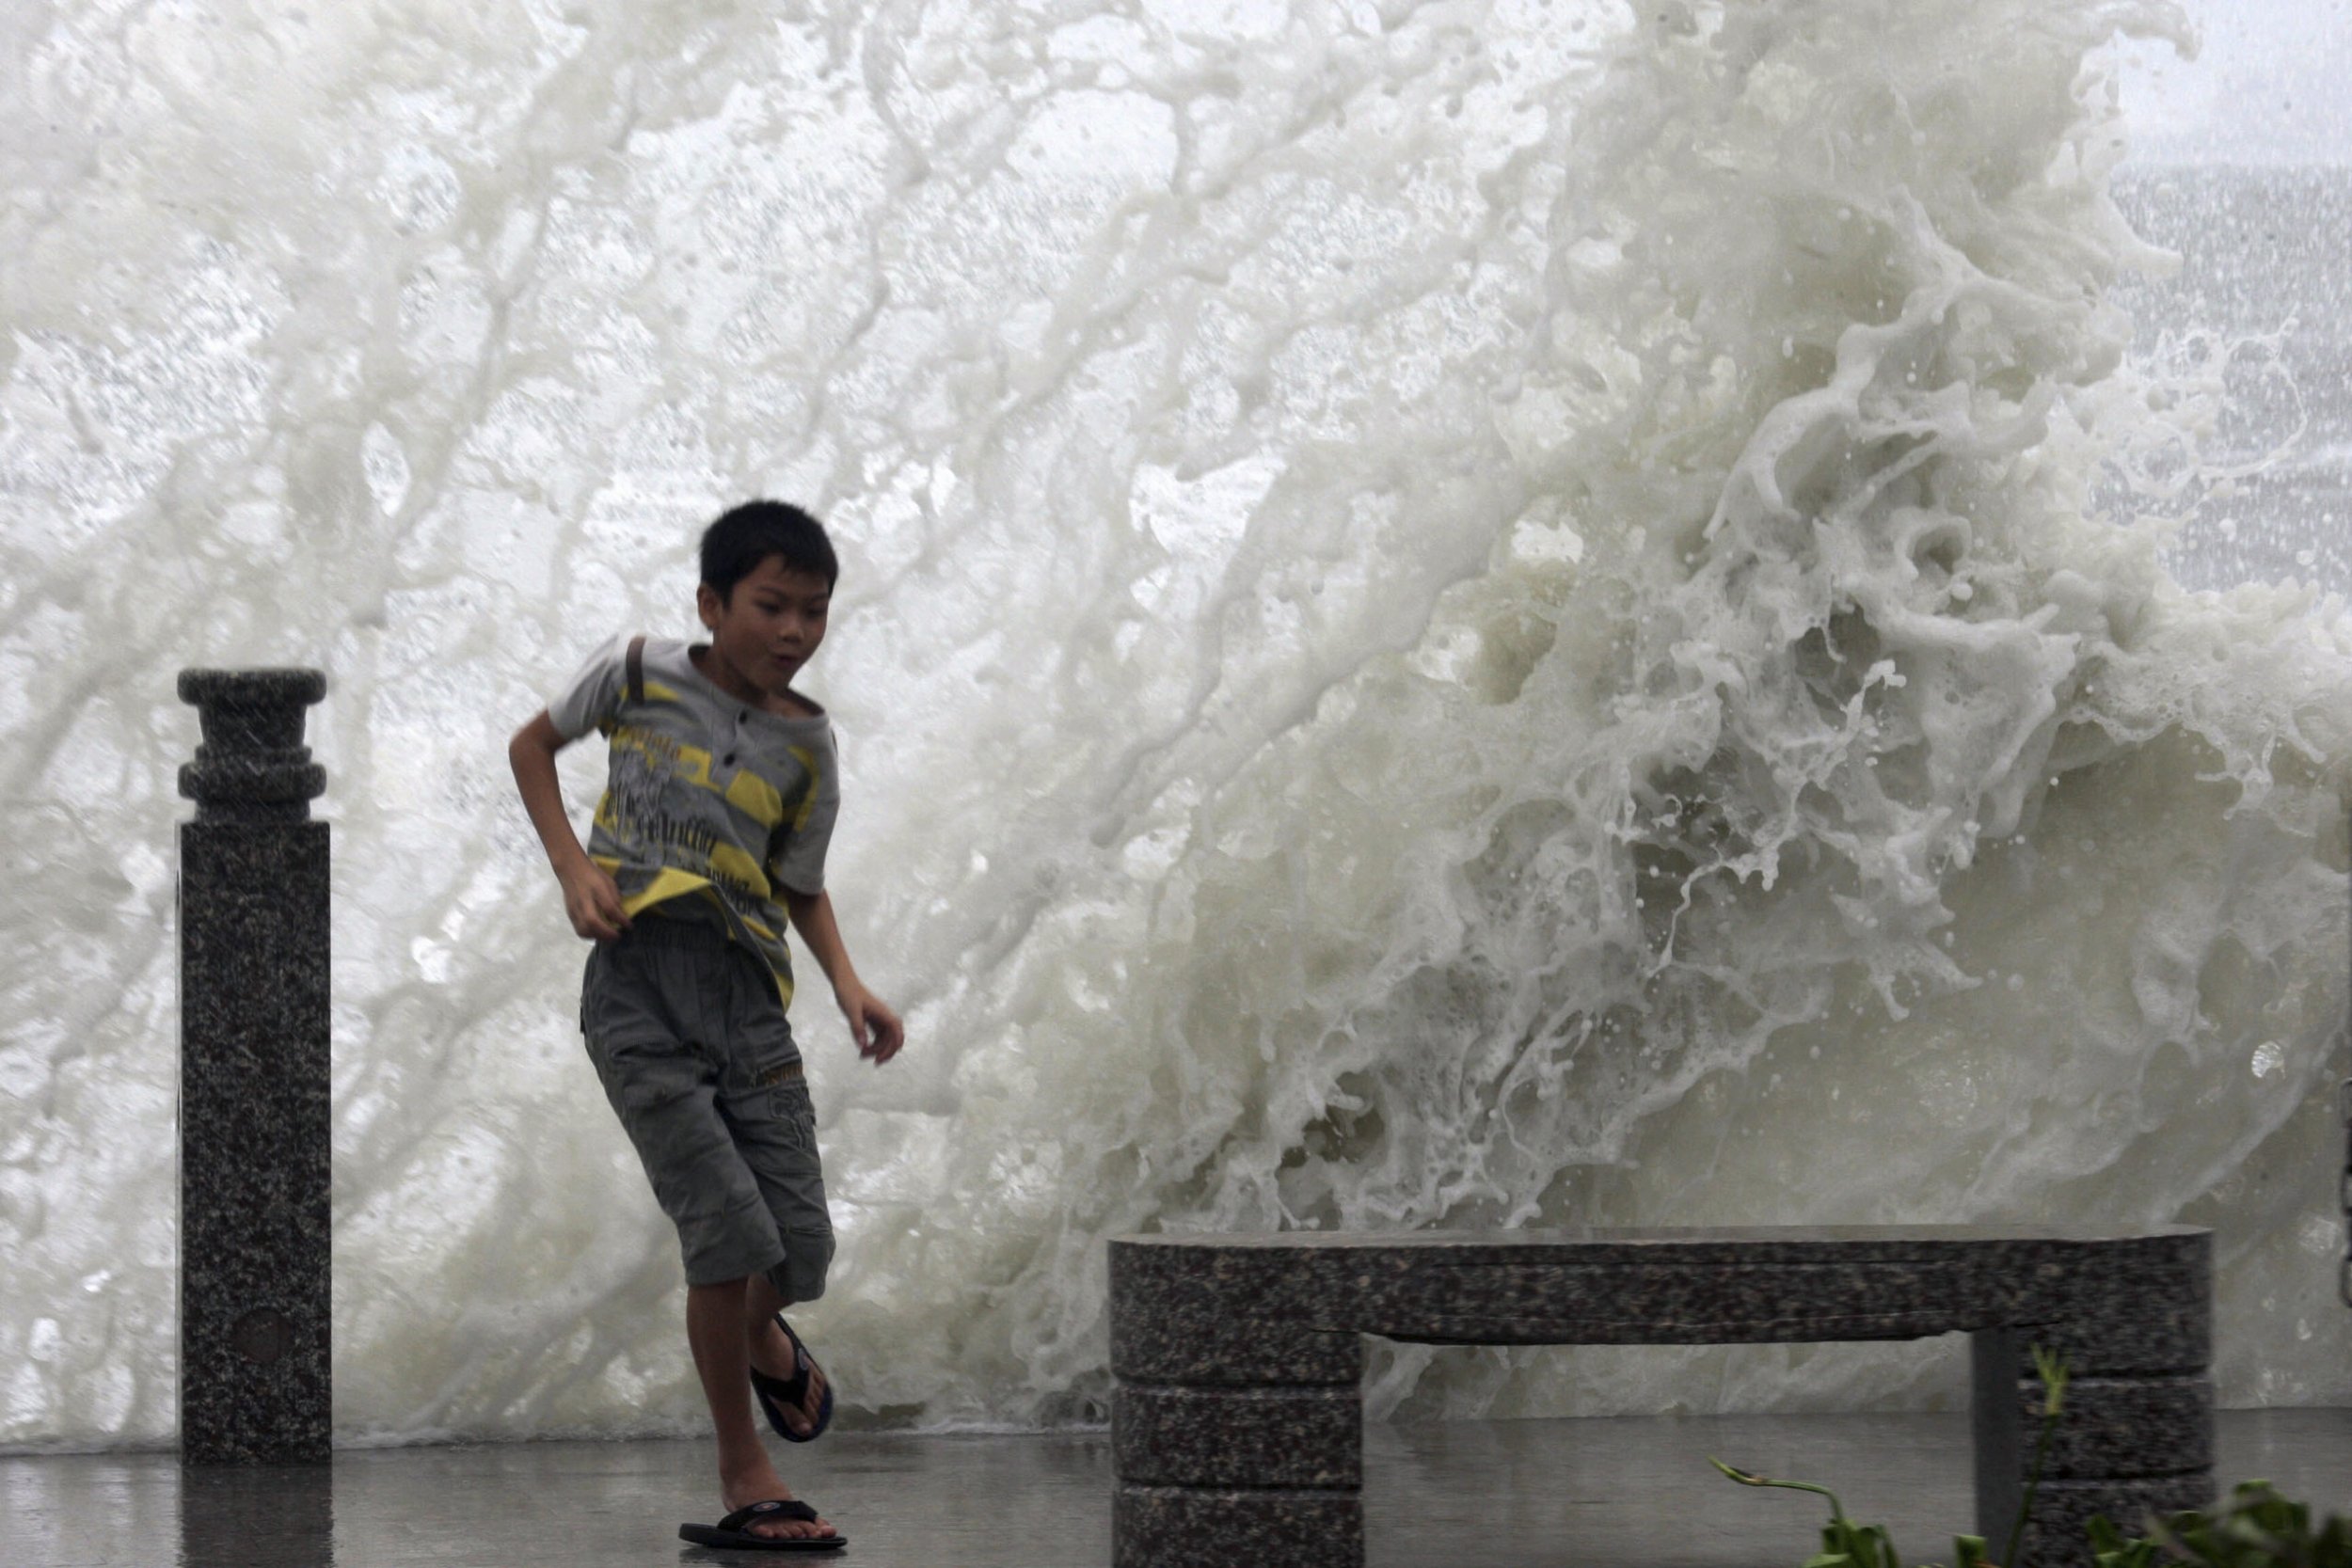 Тайфун сила. Тайфун гони. Актер Тайфун Эфе. Человек и Тайфун горизонтальное фото.